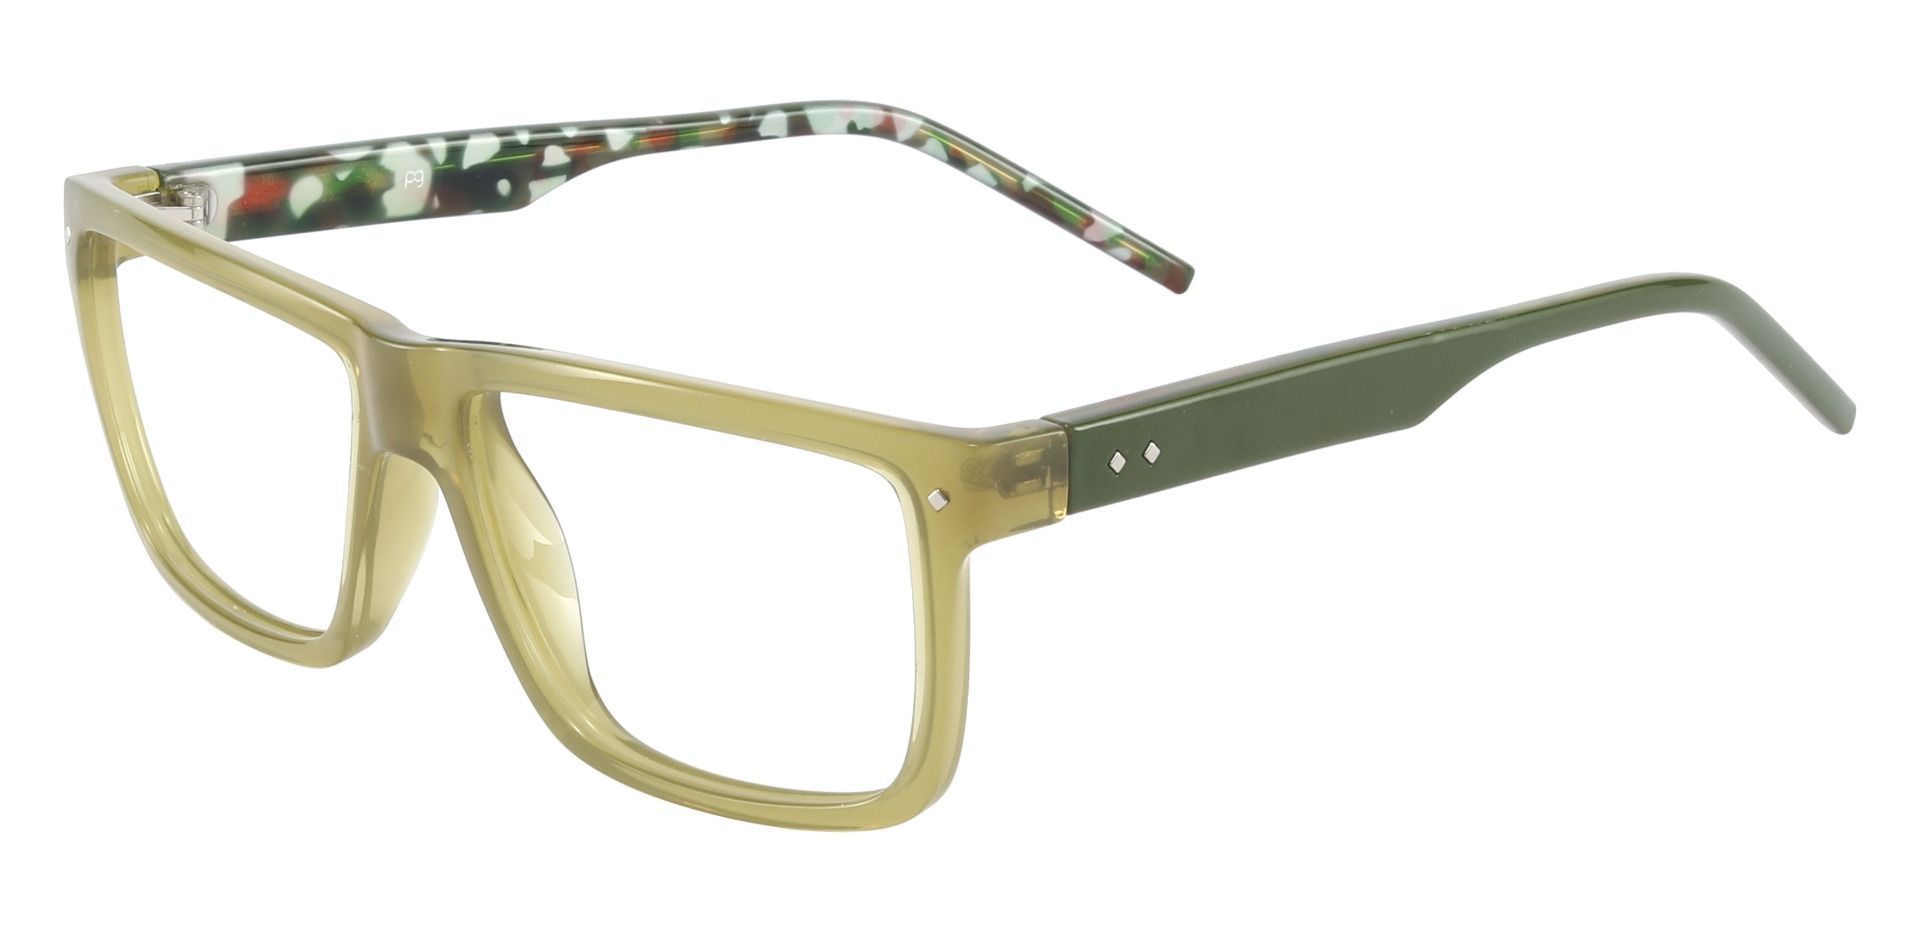 Carey Rectangle Eyeglasses Frame - Green